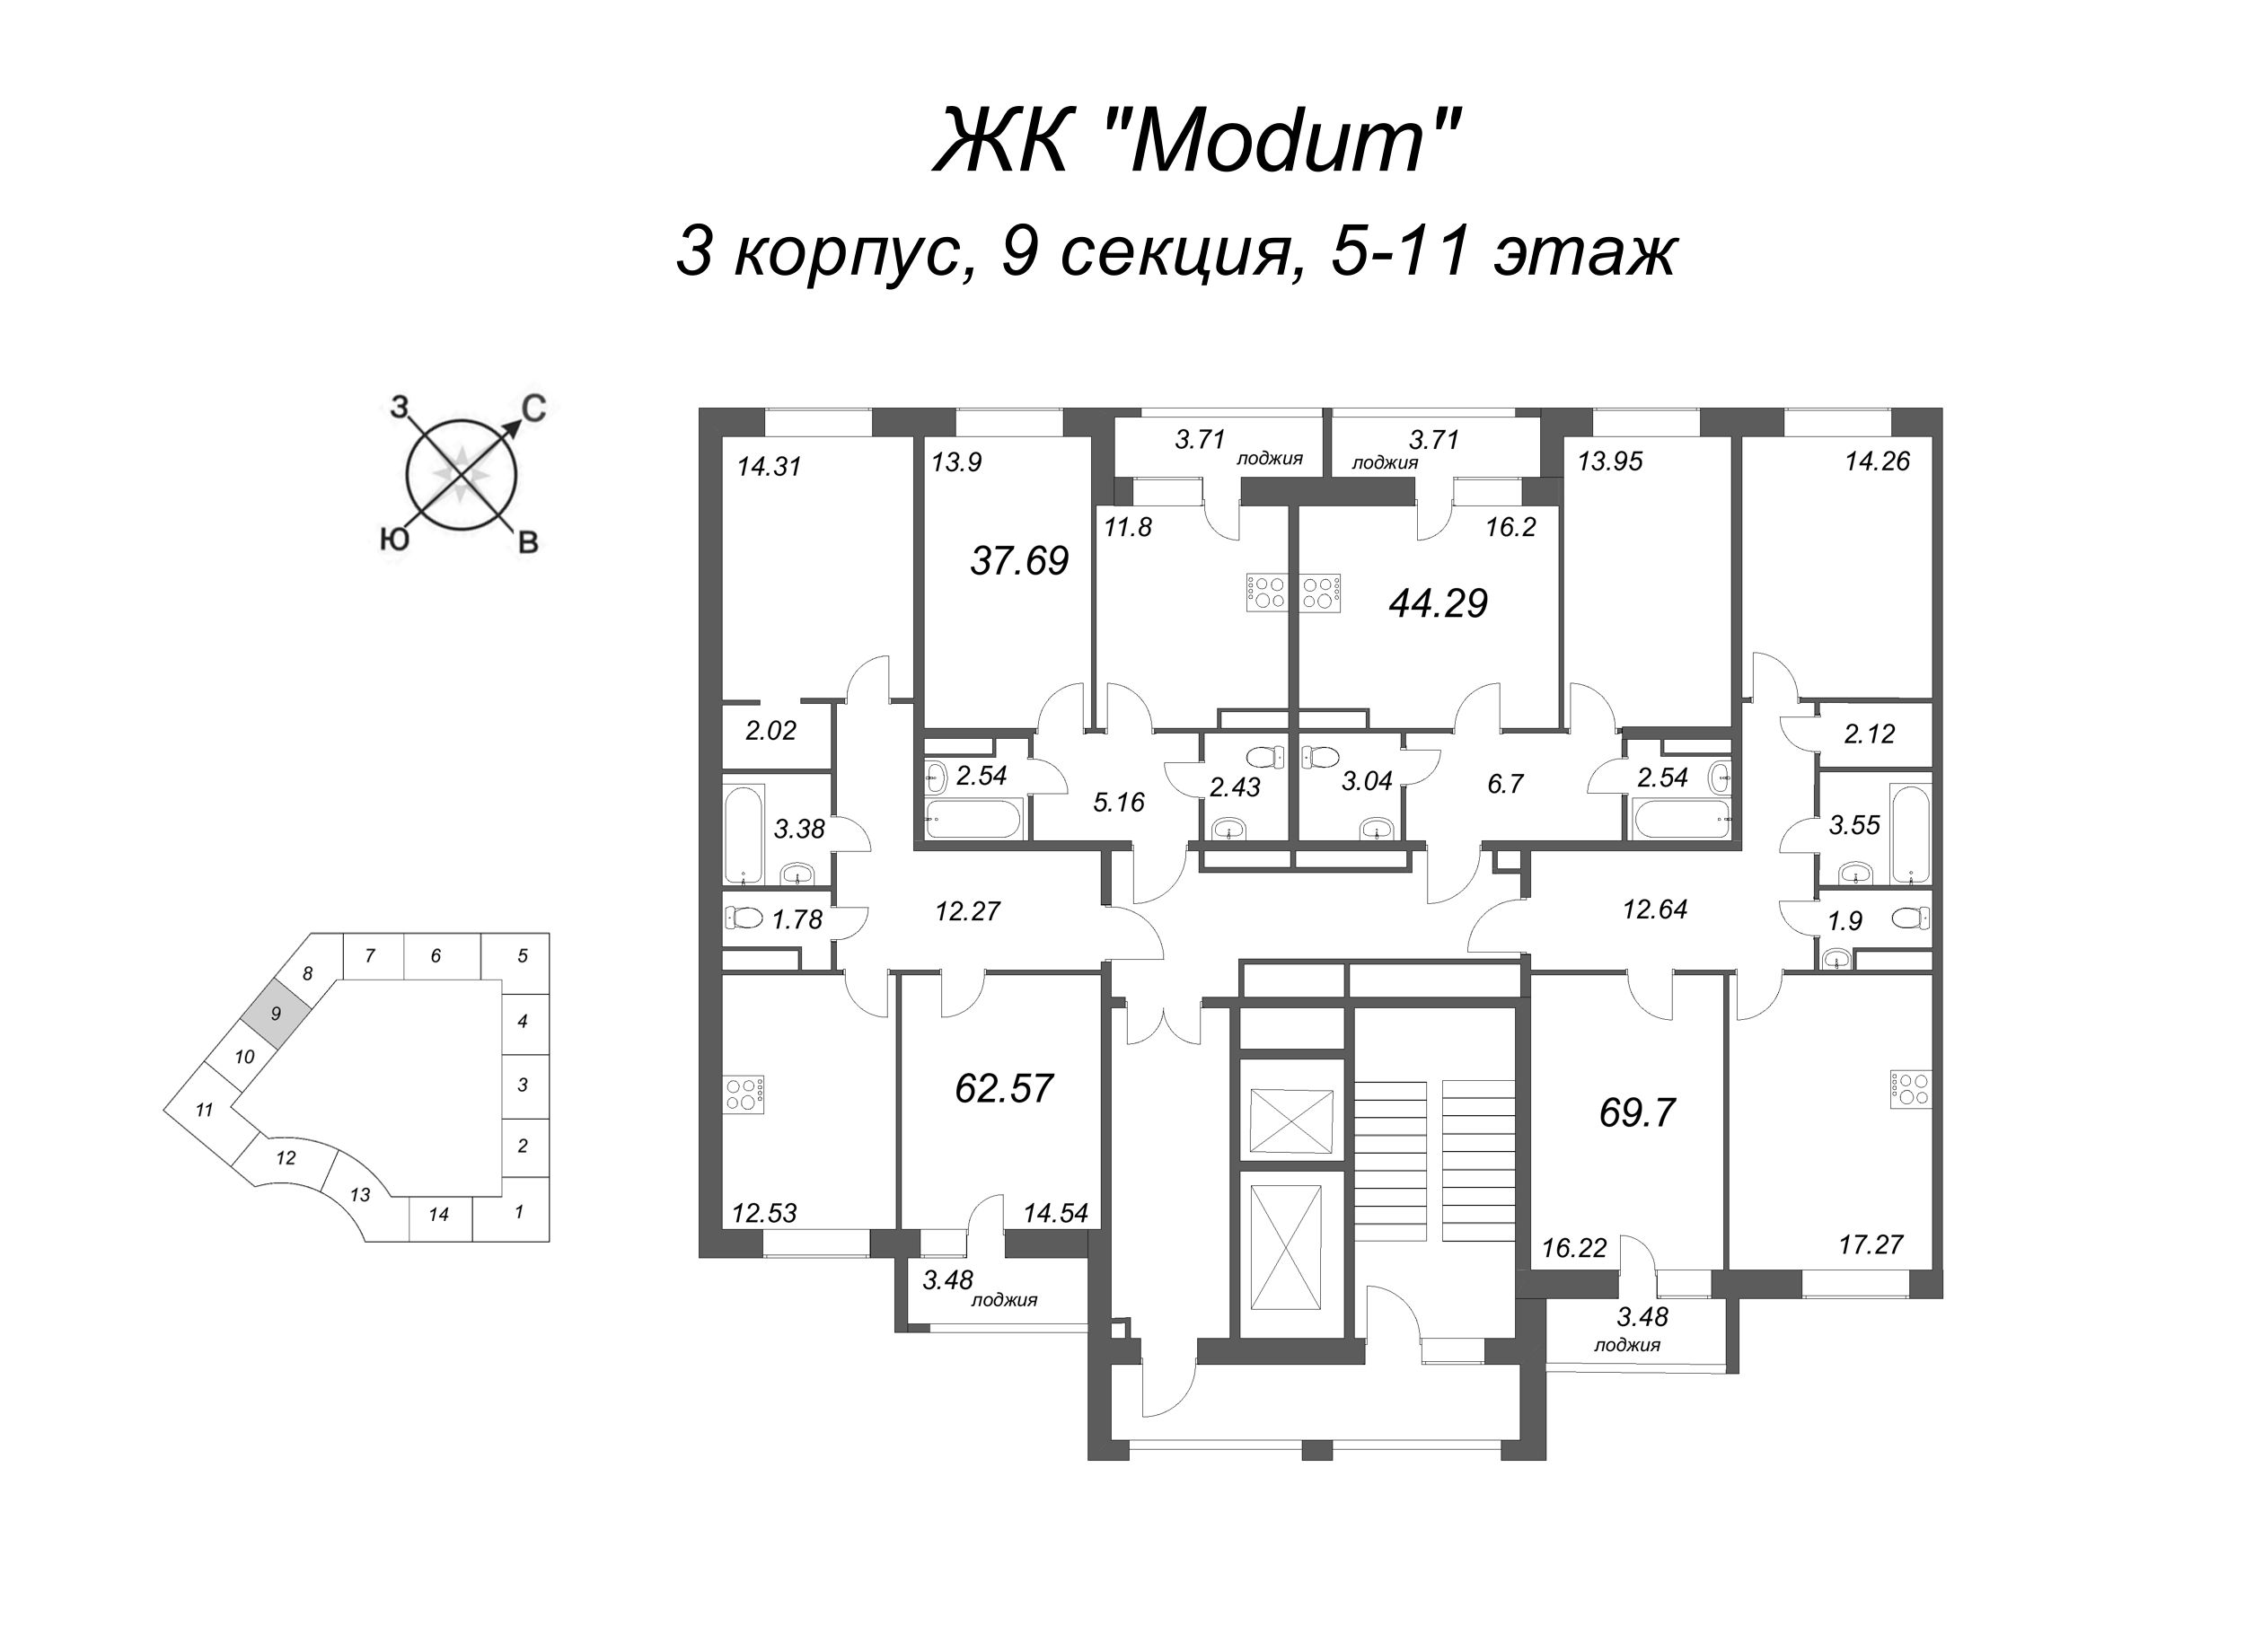 2-комнатная (Евро) квартира, 44.29 м² - планировка этажа